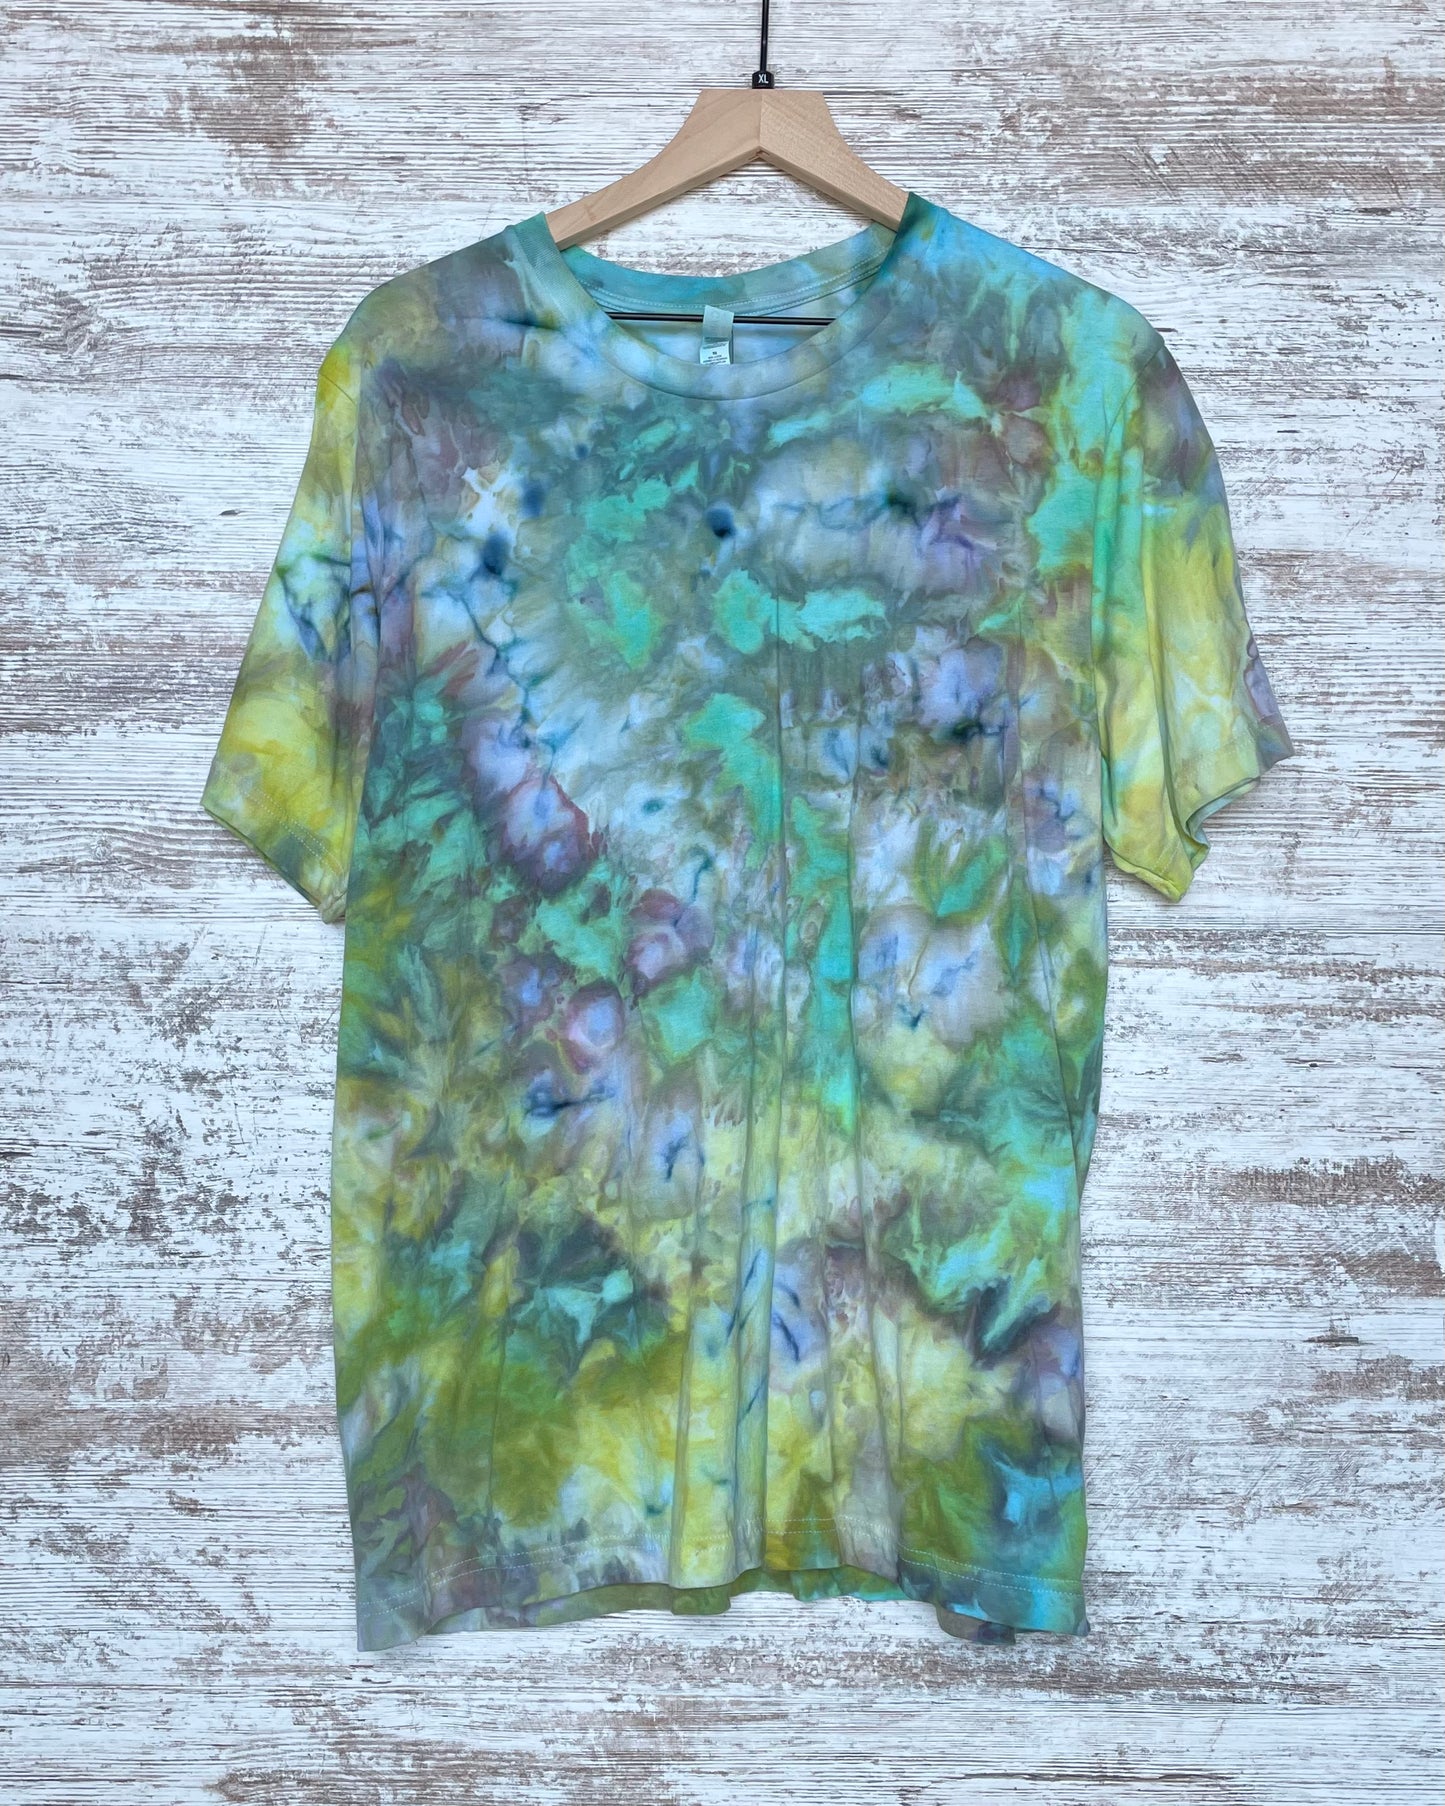 Rainforest Vibes Ice-Dyed Adult Unisex T-shirt